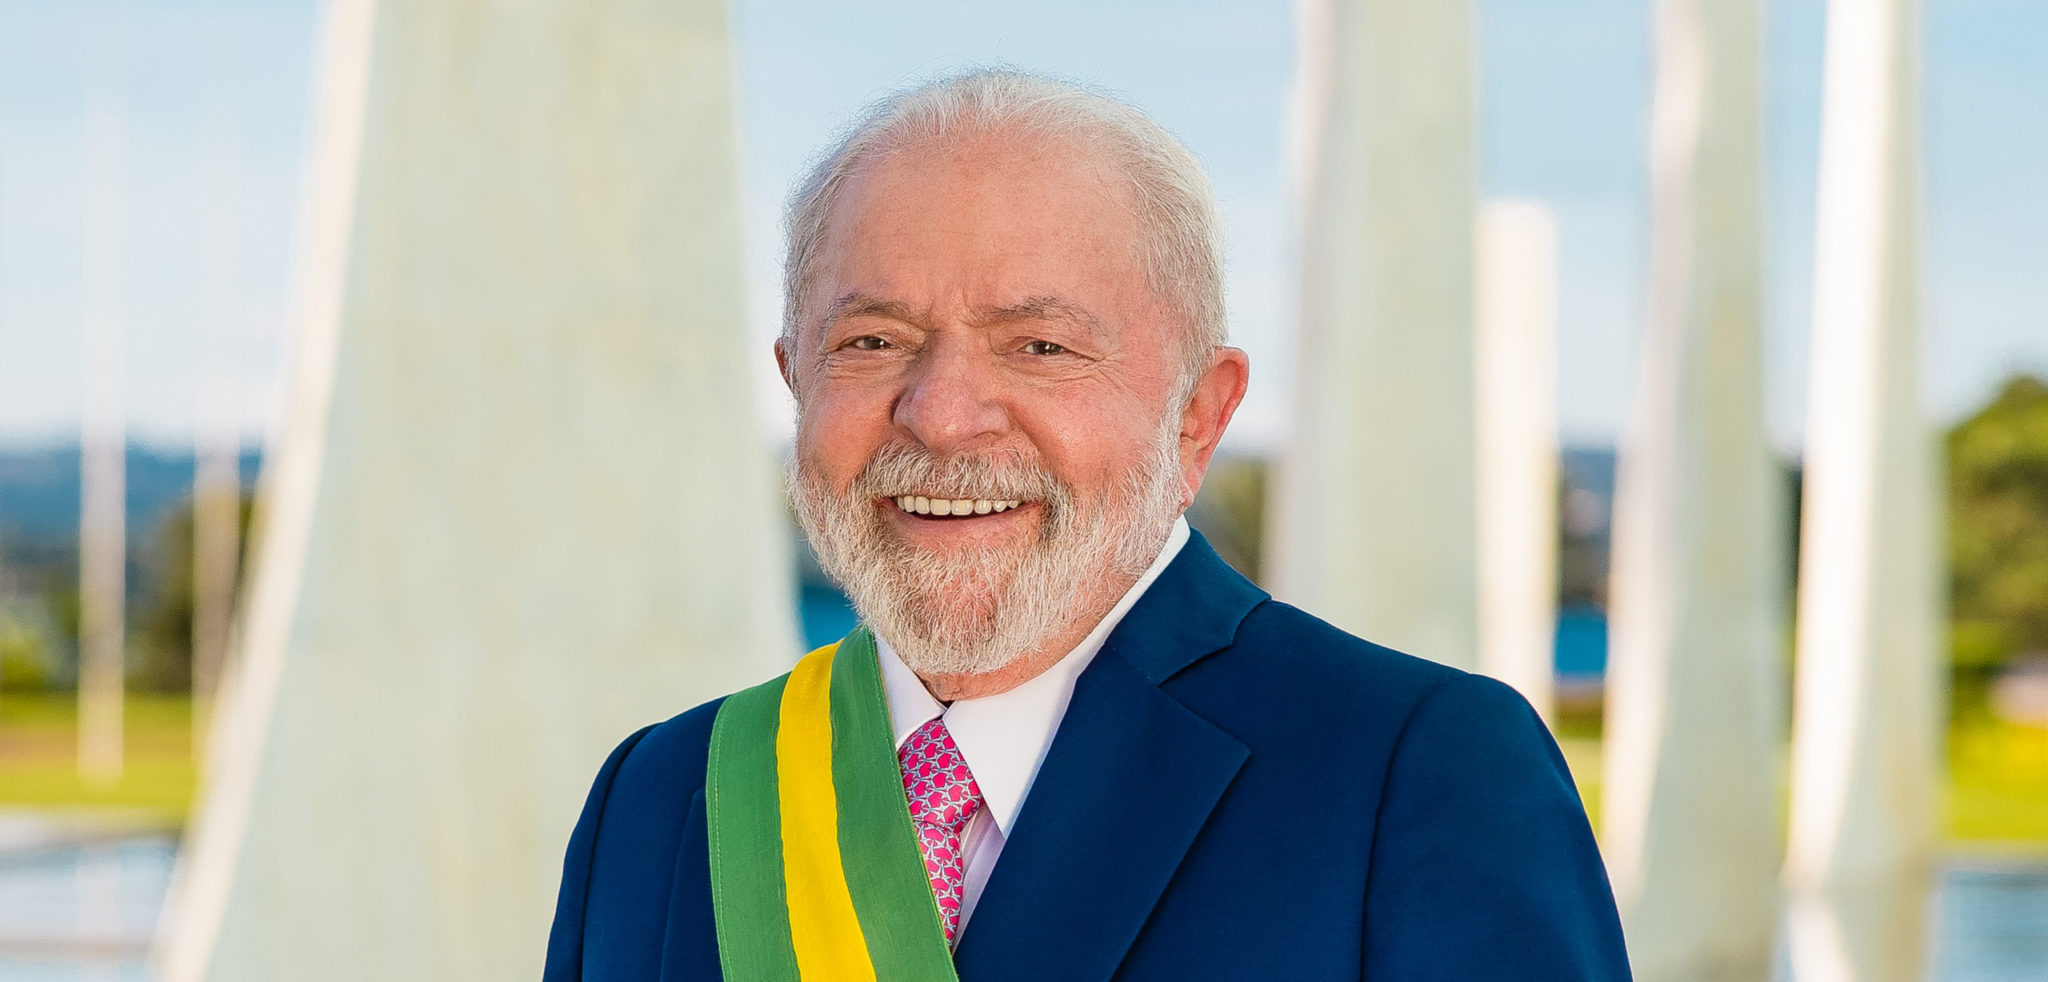 Foto Oficial do Presidente Lula